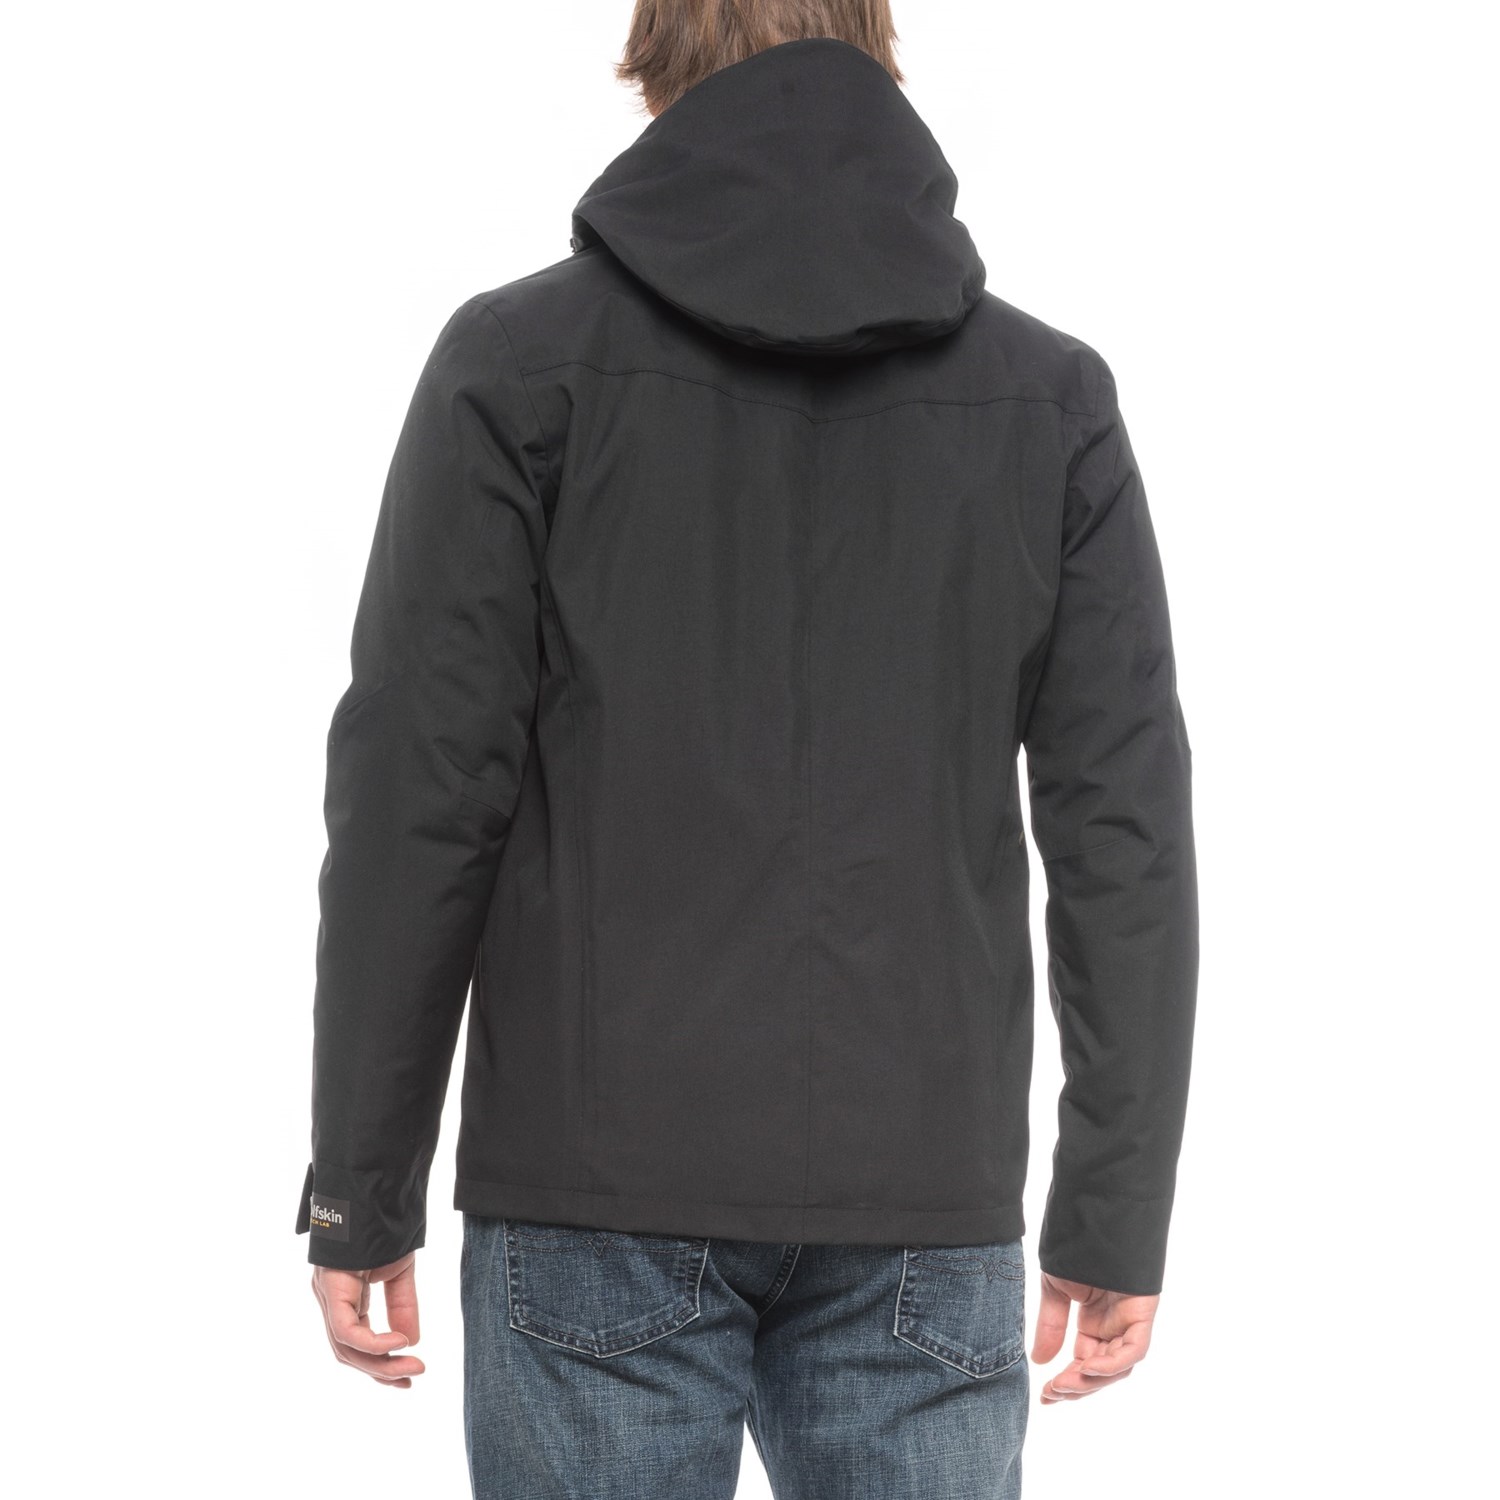 Jack Wolfskin Tech Lab Williamsburg Jacket (For Men) - Save 50%